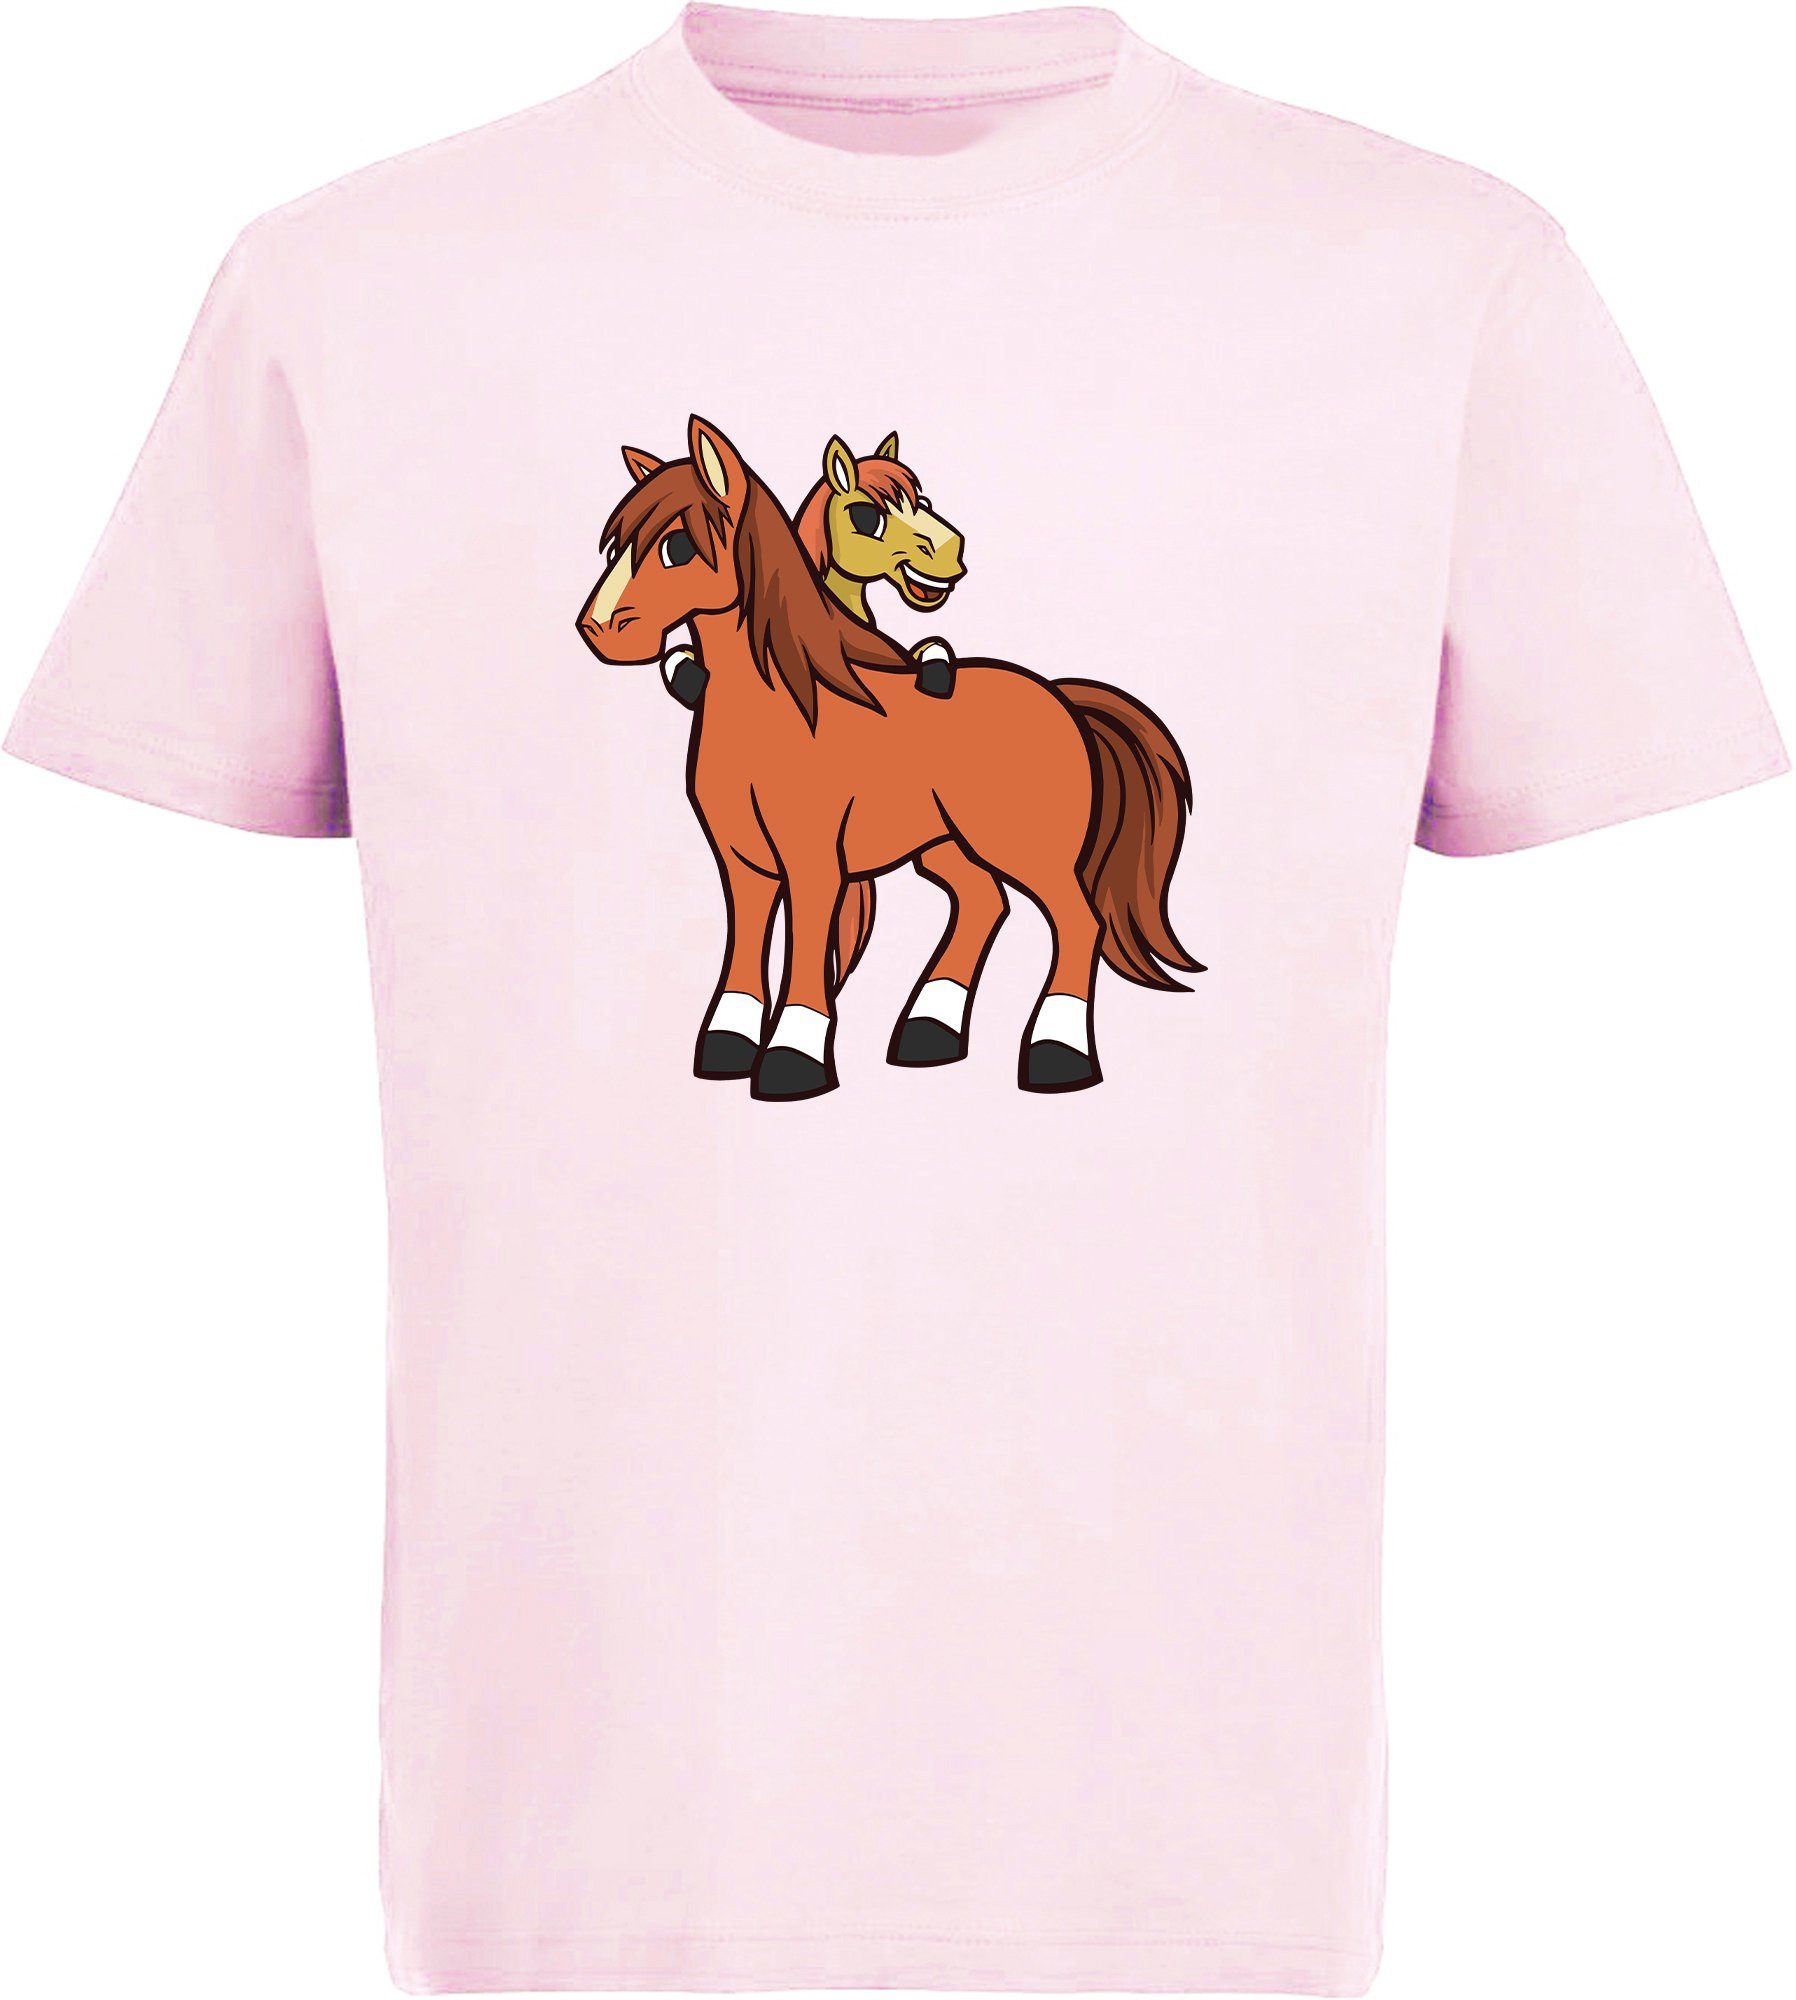 MyDesign24 T-Shirt Kinder Pferde Print Shirt bedruckt - 2 cartoon Pferde Baumwollshirt mit Aufdruck, i251 rosa